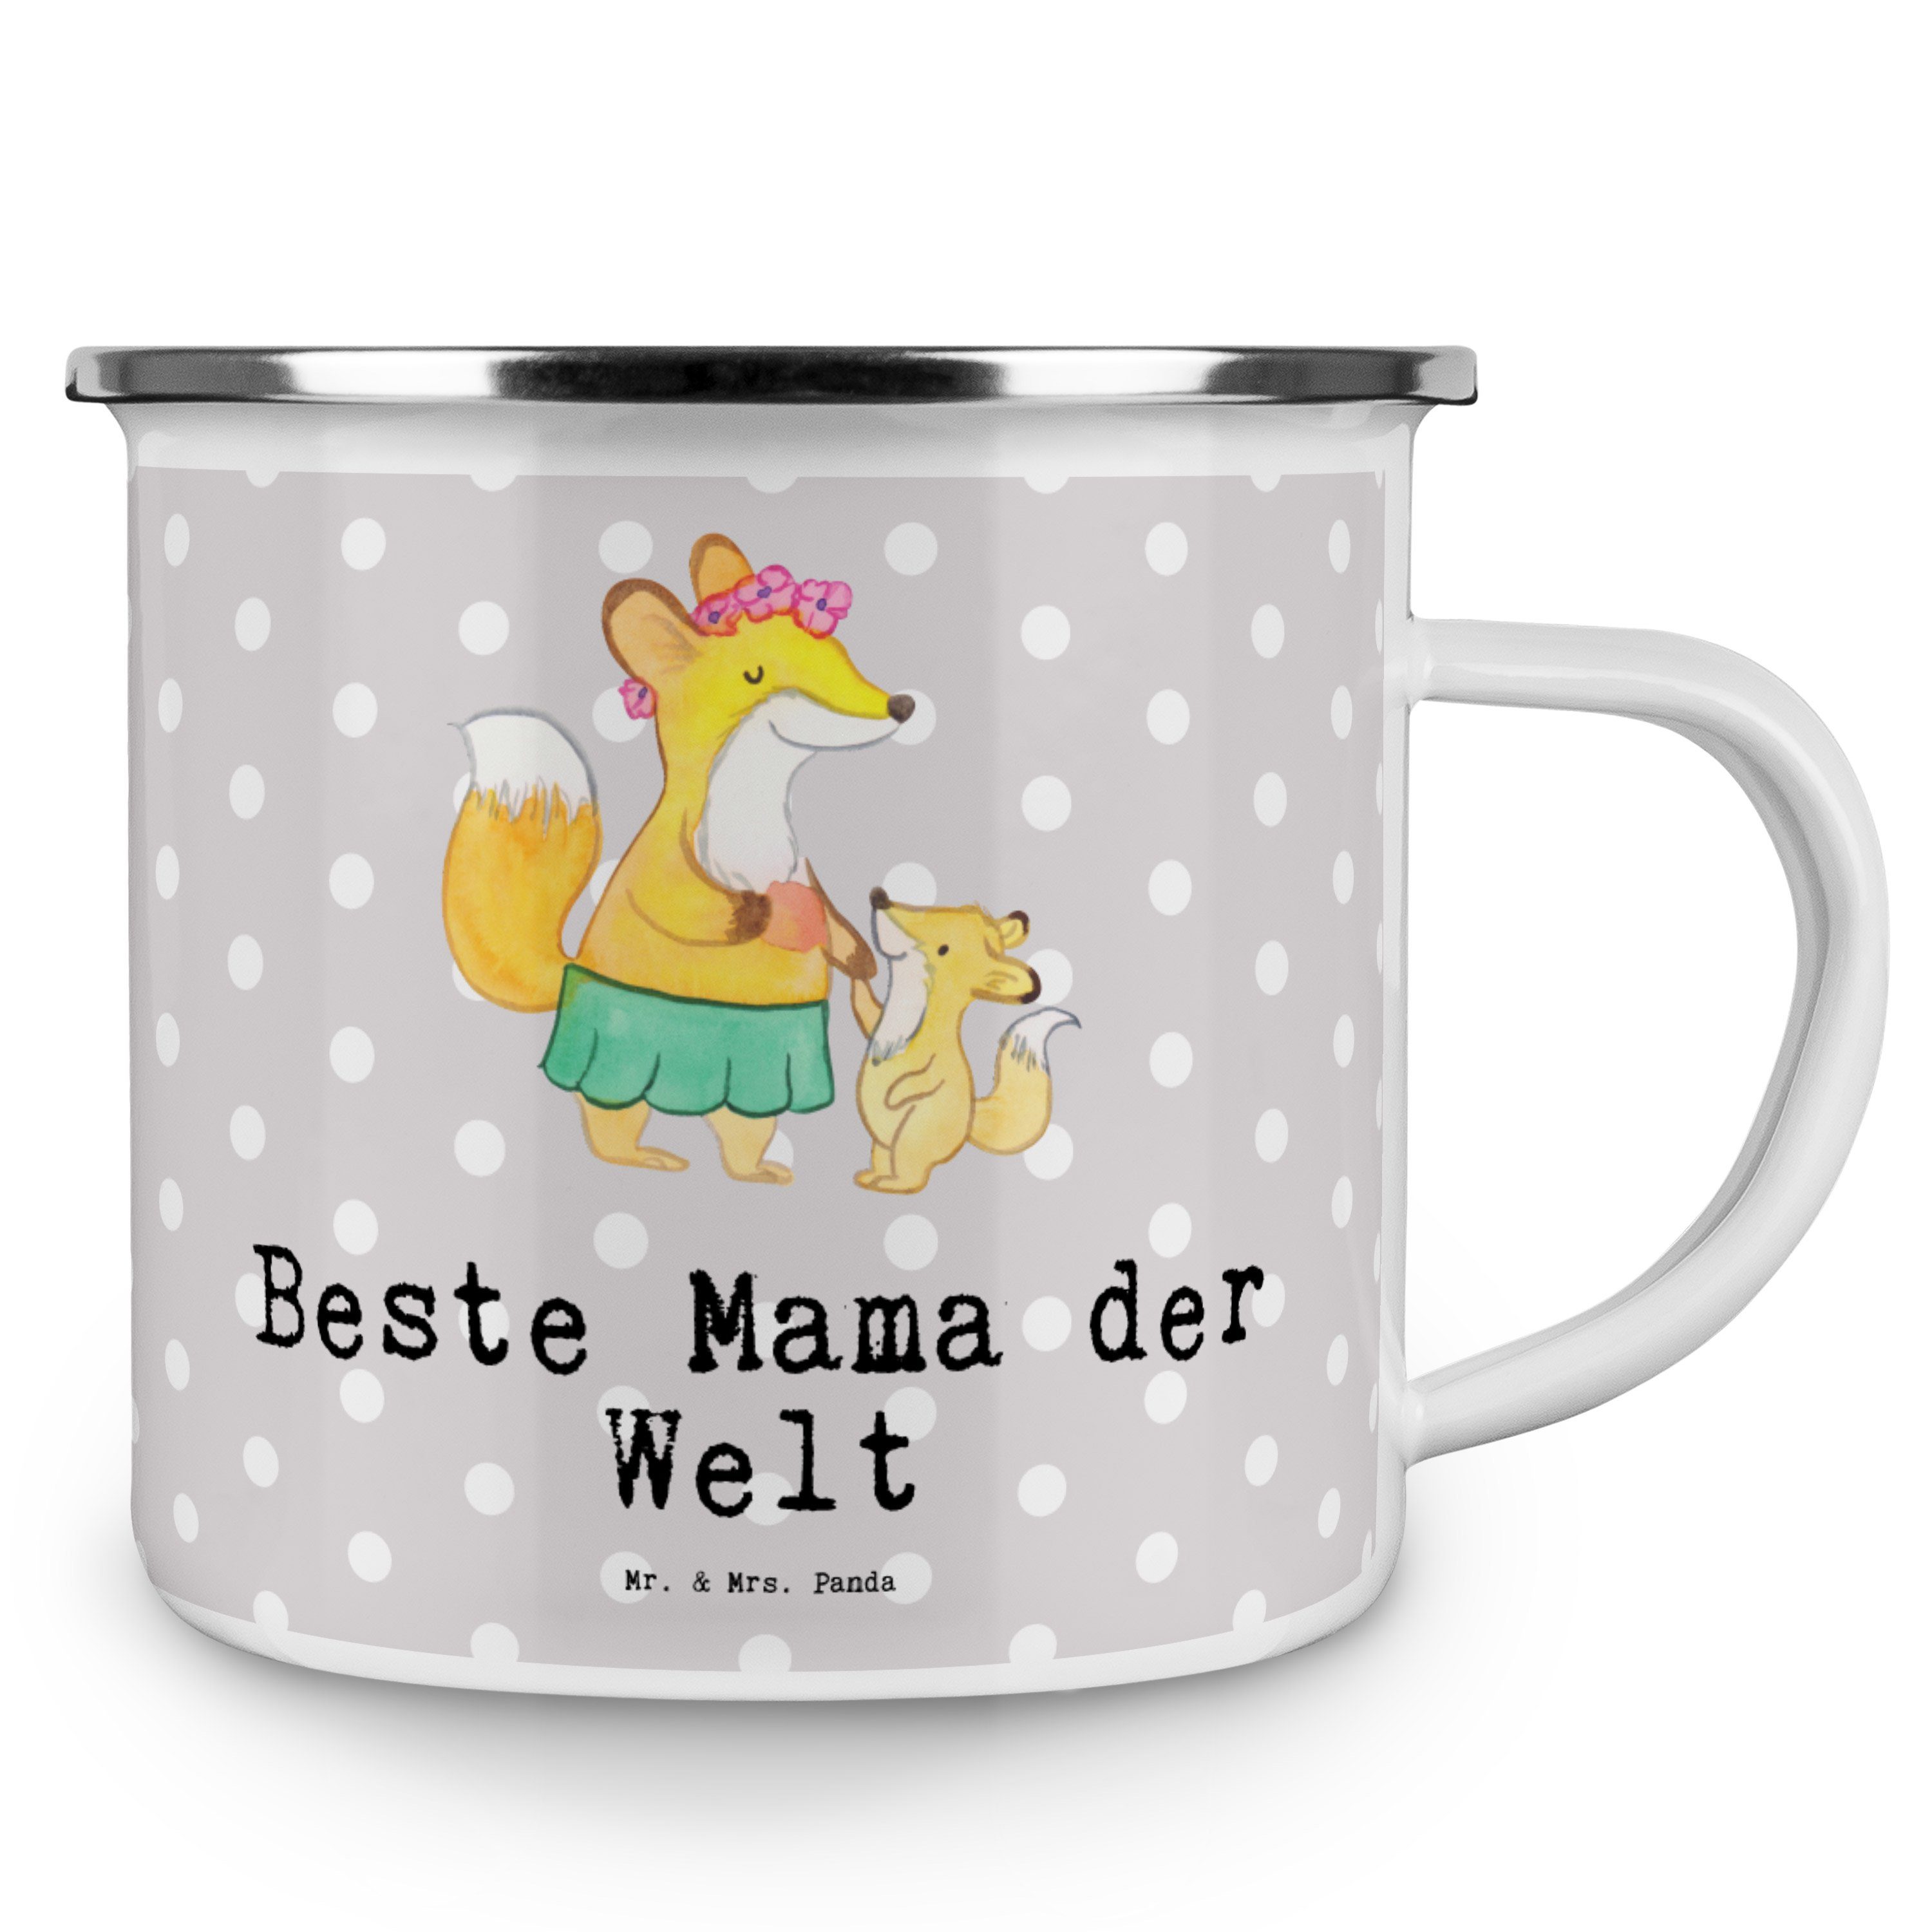 Mr. & Mrs. Panda Welt Fuchs Geschenk, Becher Grau Edels, Supermama, Emaille der Pastell - Mama Beste 